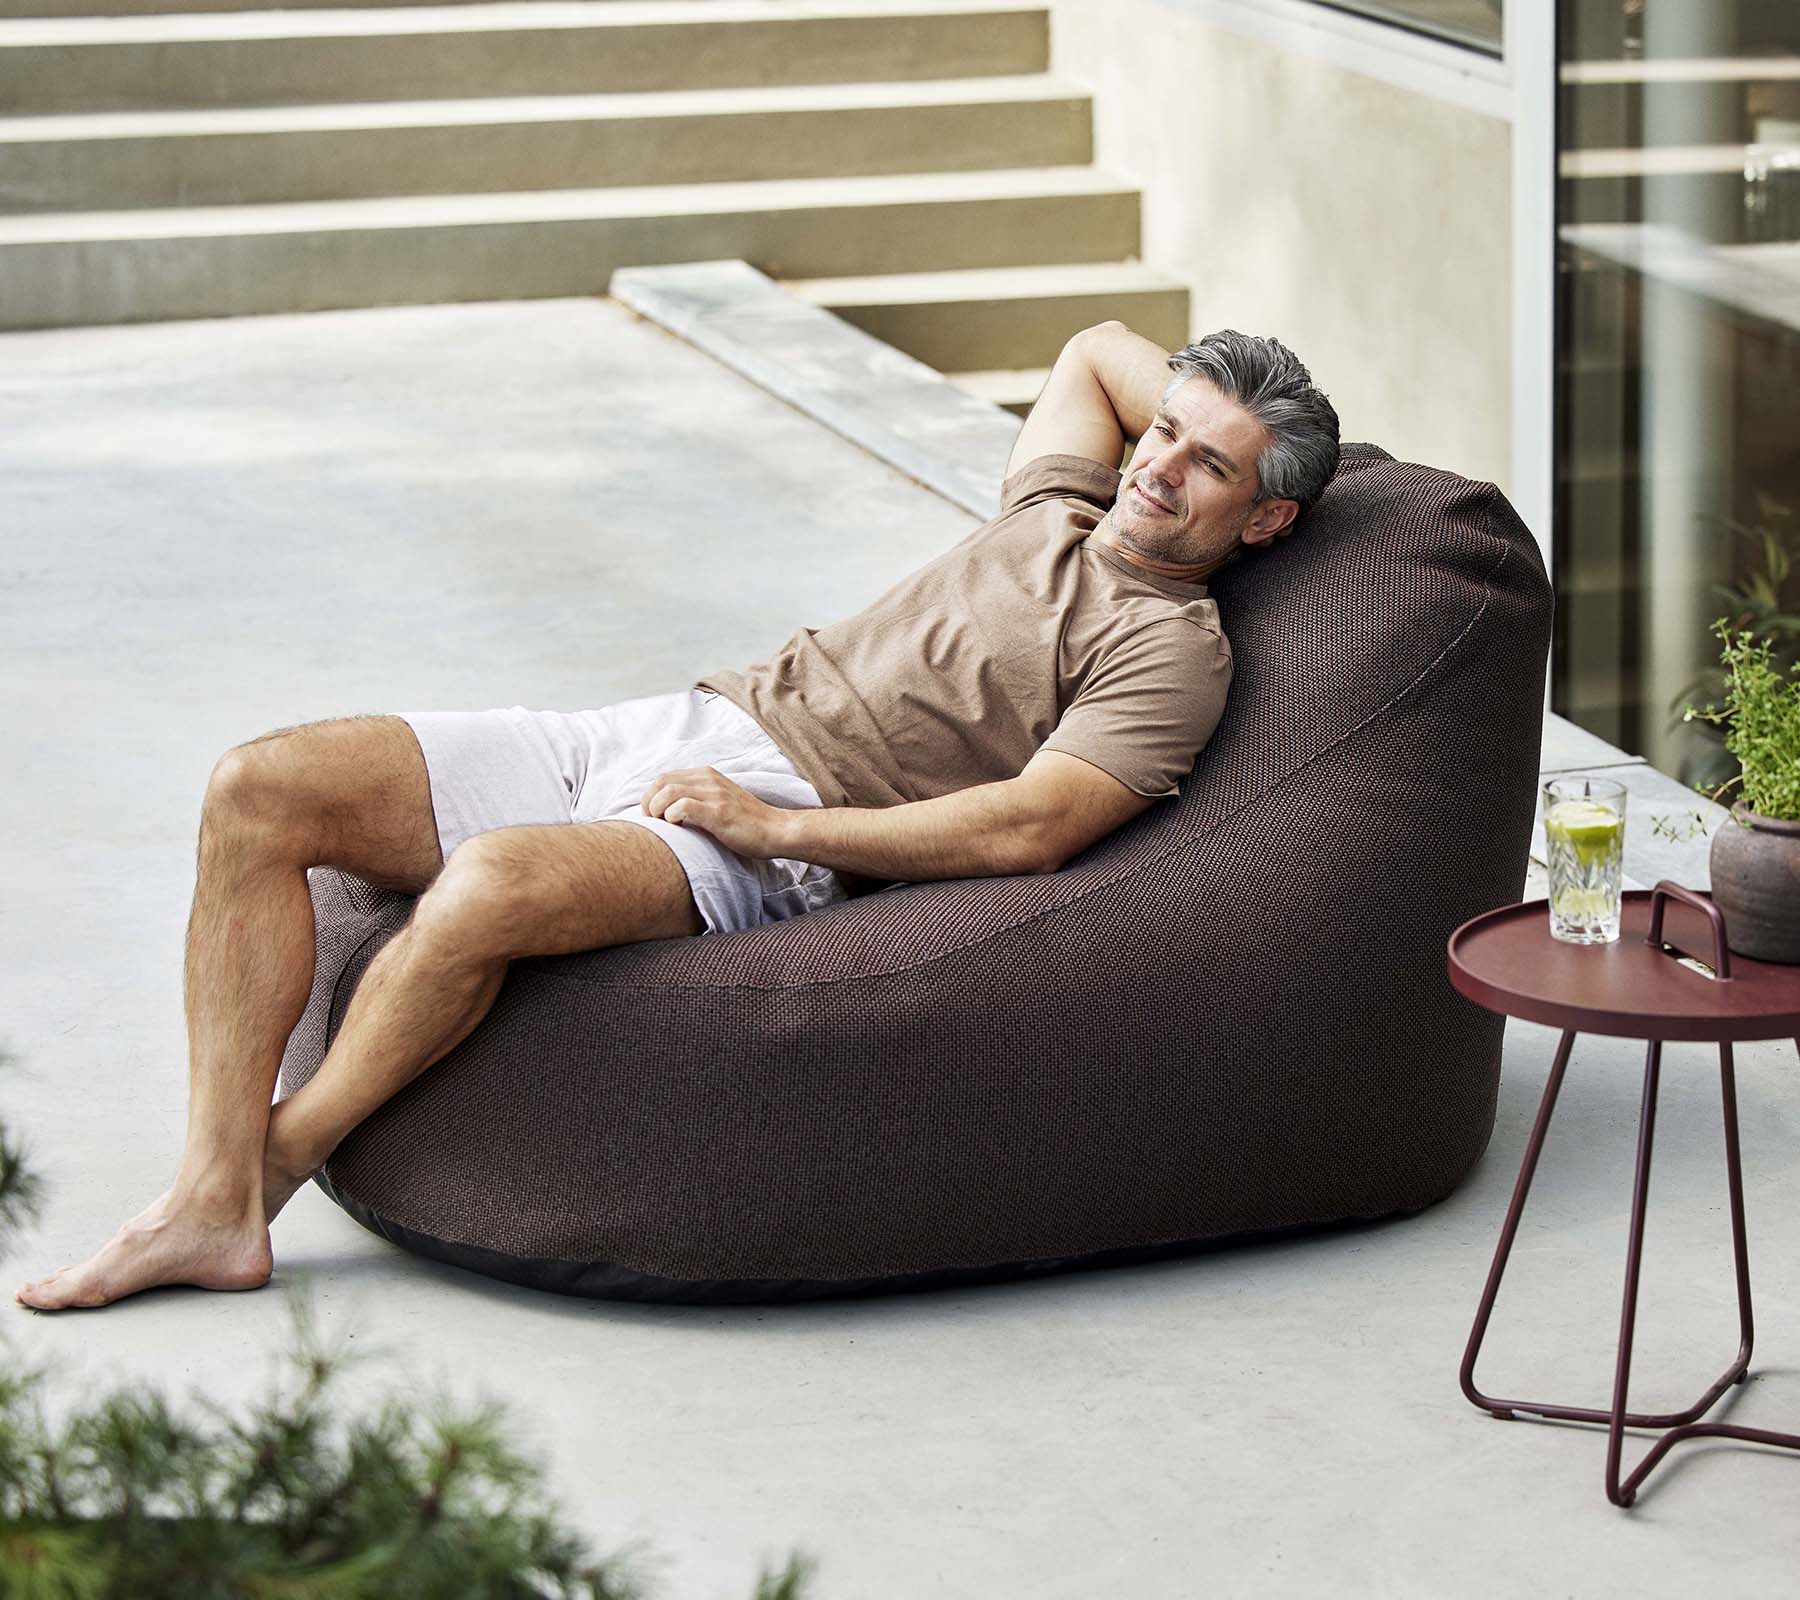 Yogibo - Bean Bag Chairs, Furniture, & Lifestyle Essentials